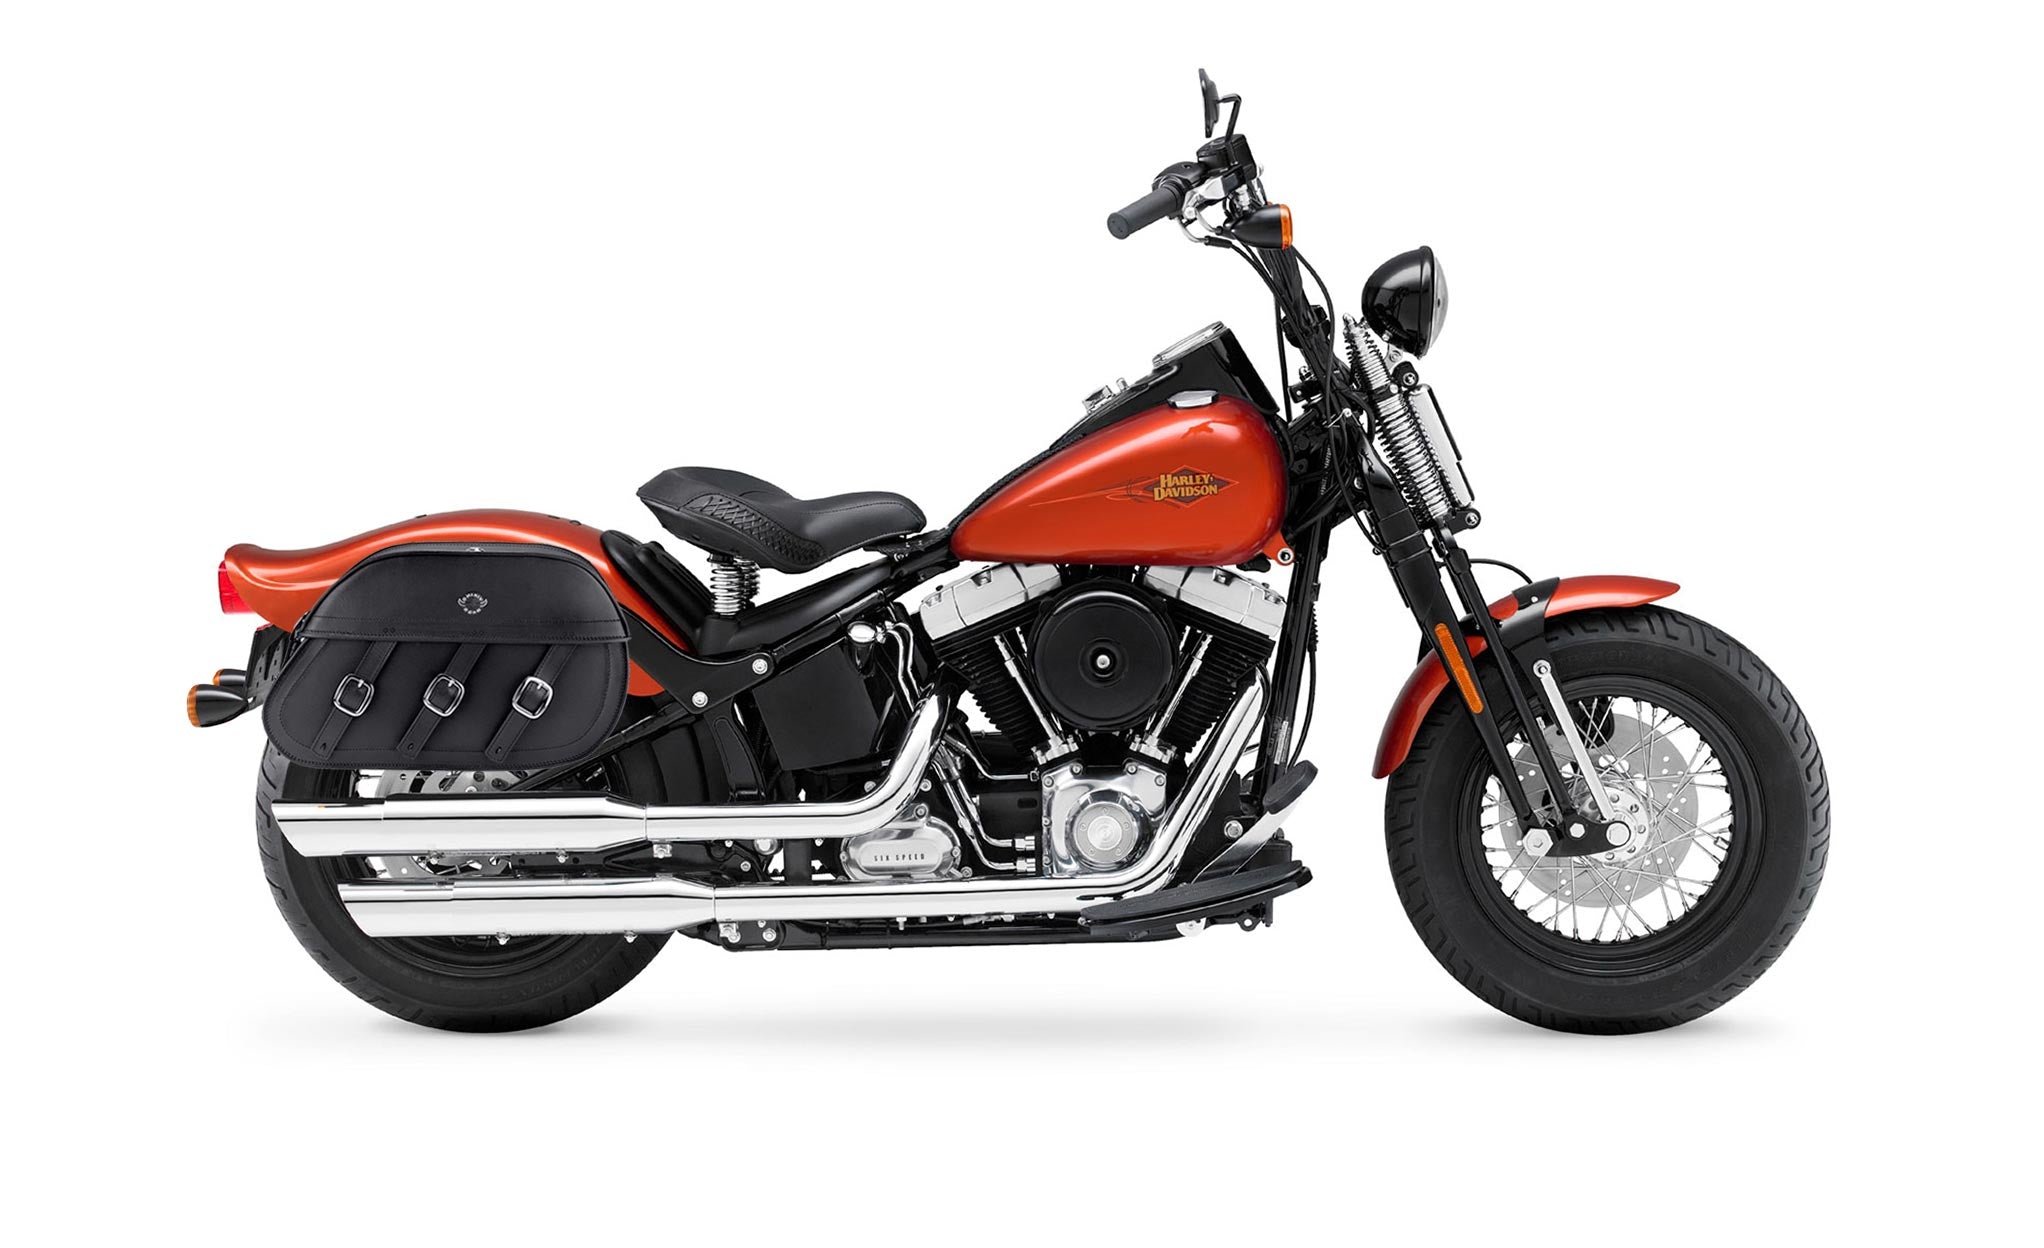 Viking Trianon Extra Large Leather Motorcycle Saddlebags For Harley Softail Cross Bones Flstsb on Bike Photo @expand